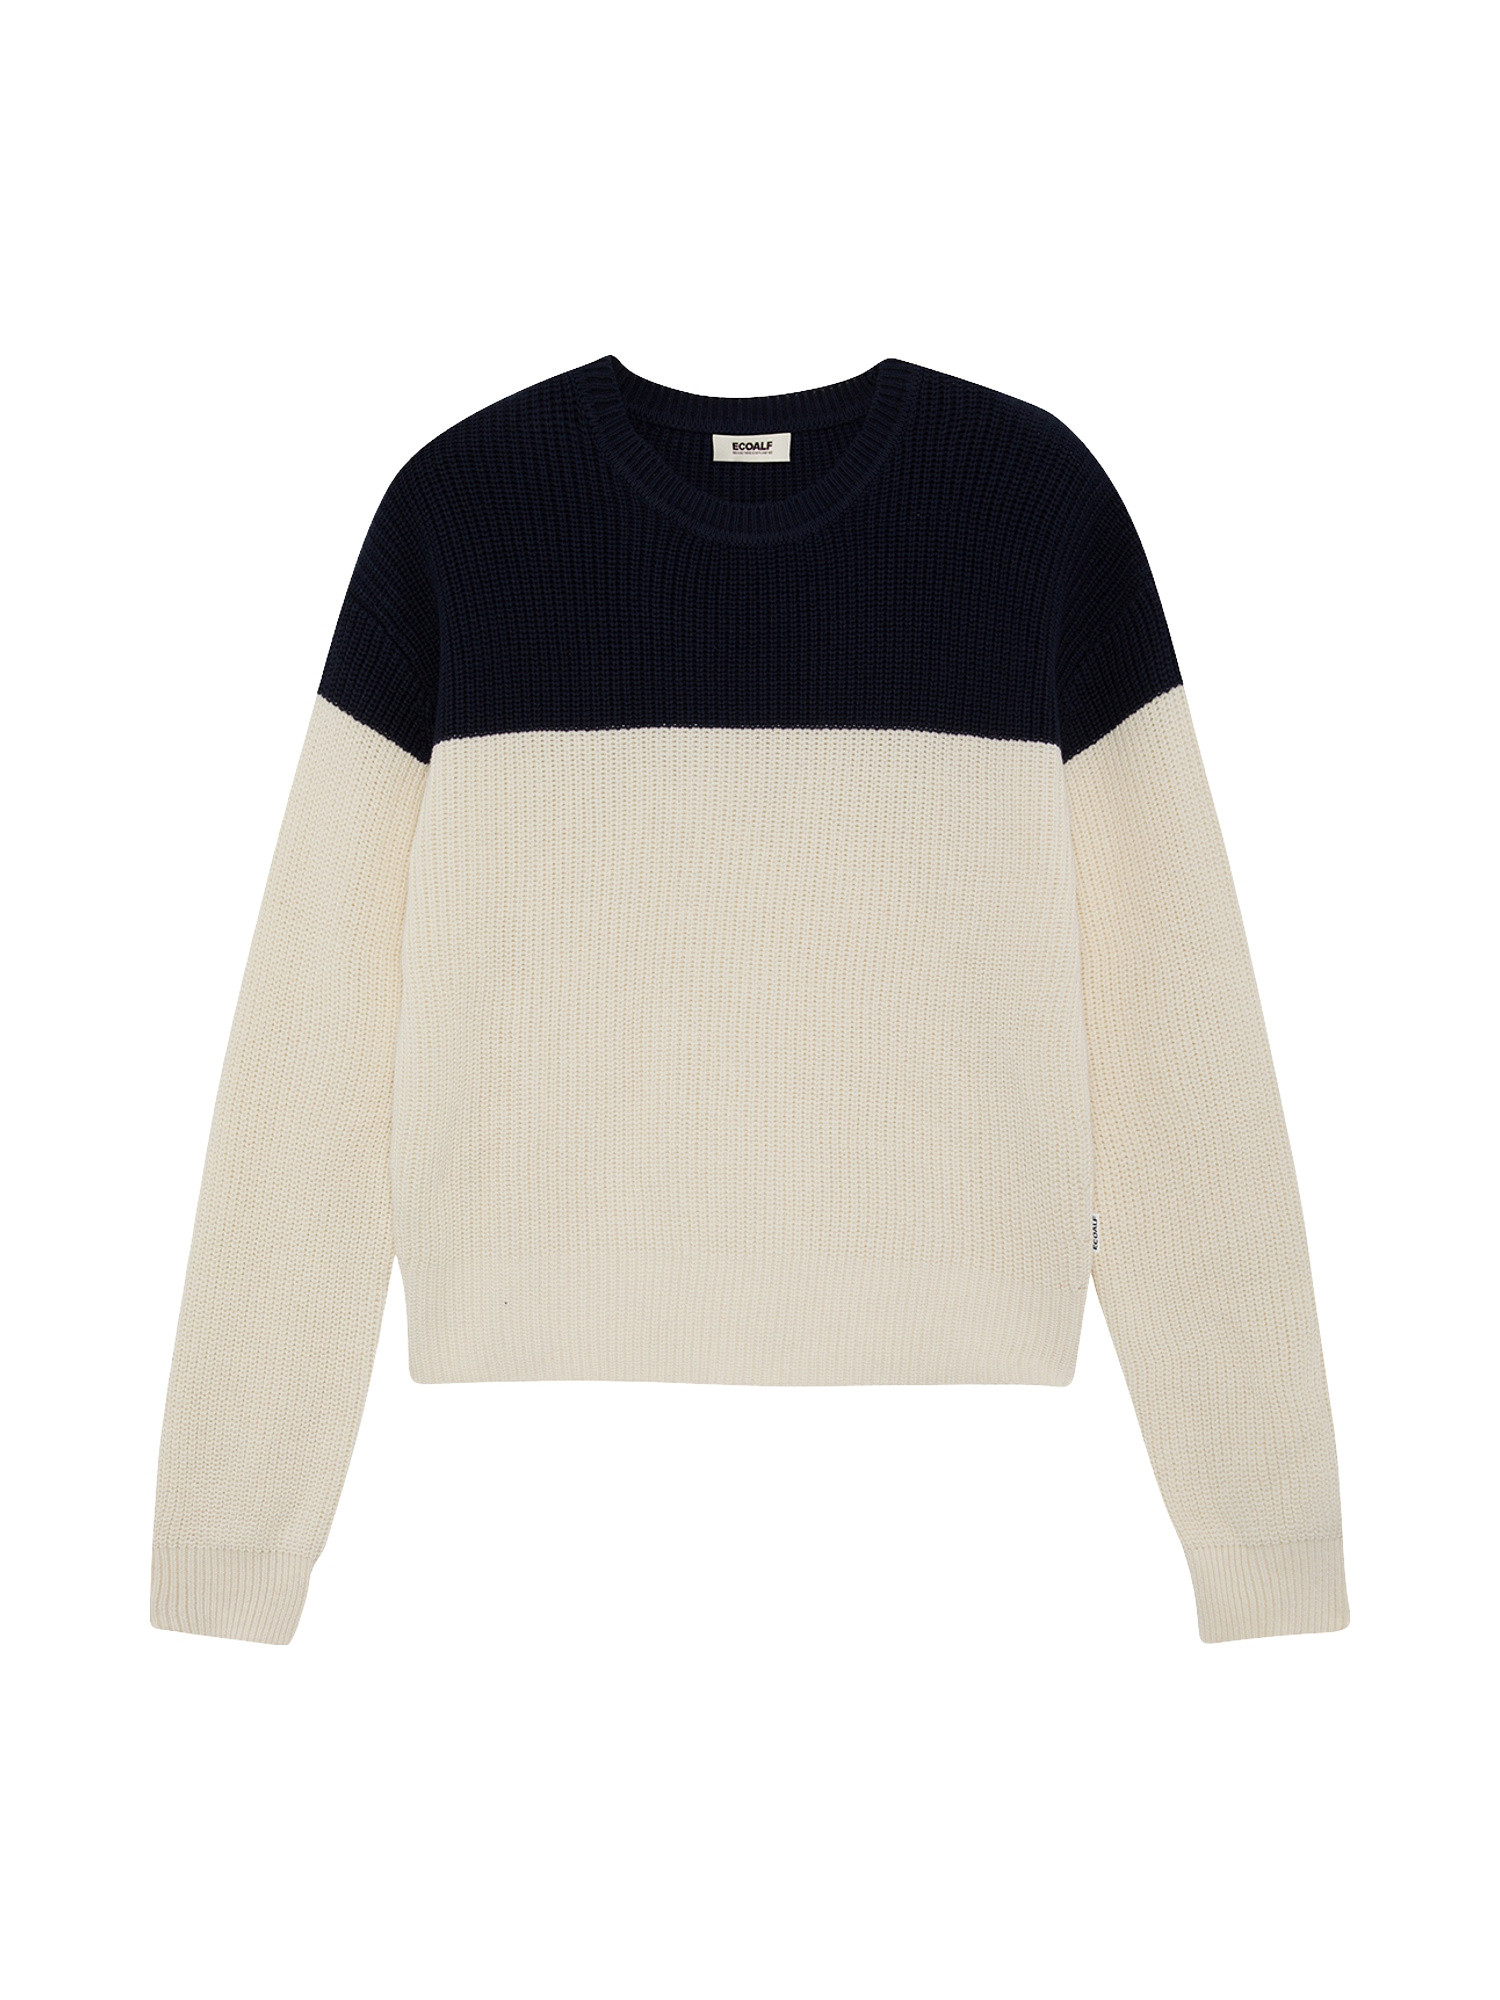 Ecoalf - Elm knit pullover, White, large image number 0